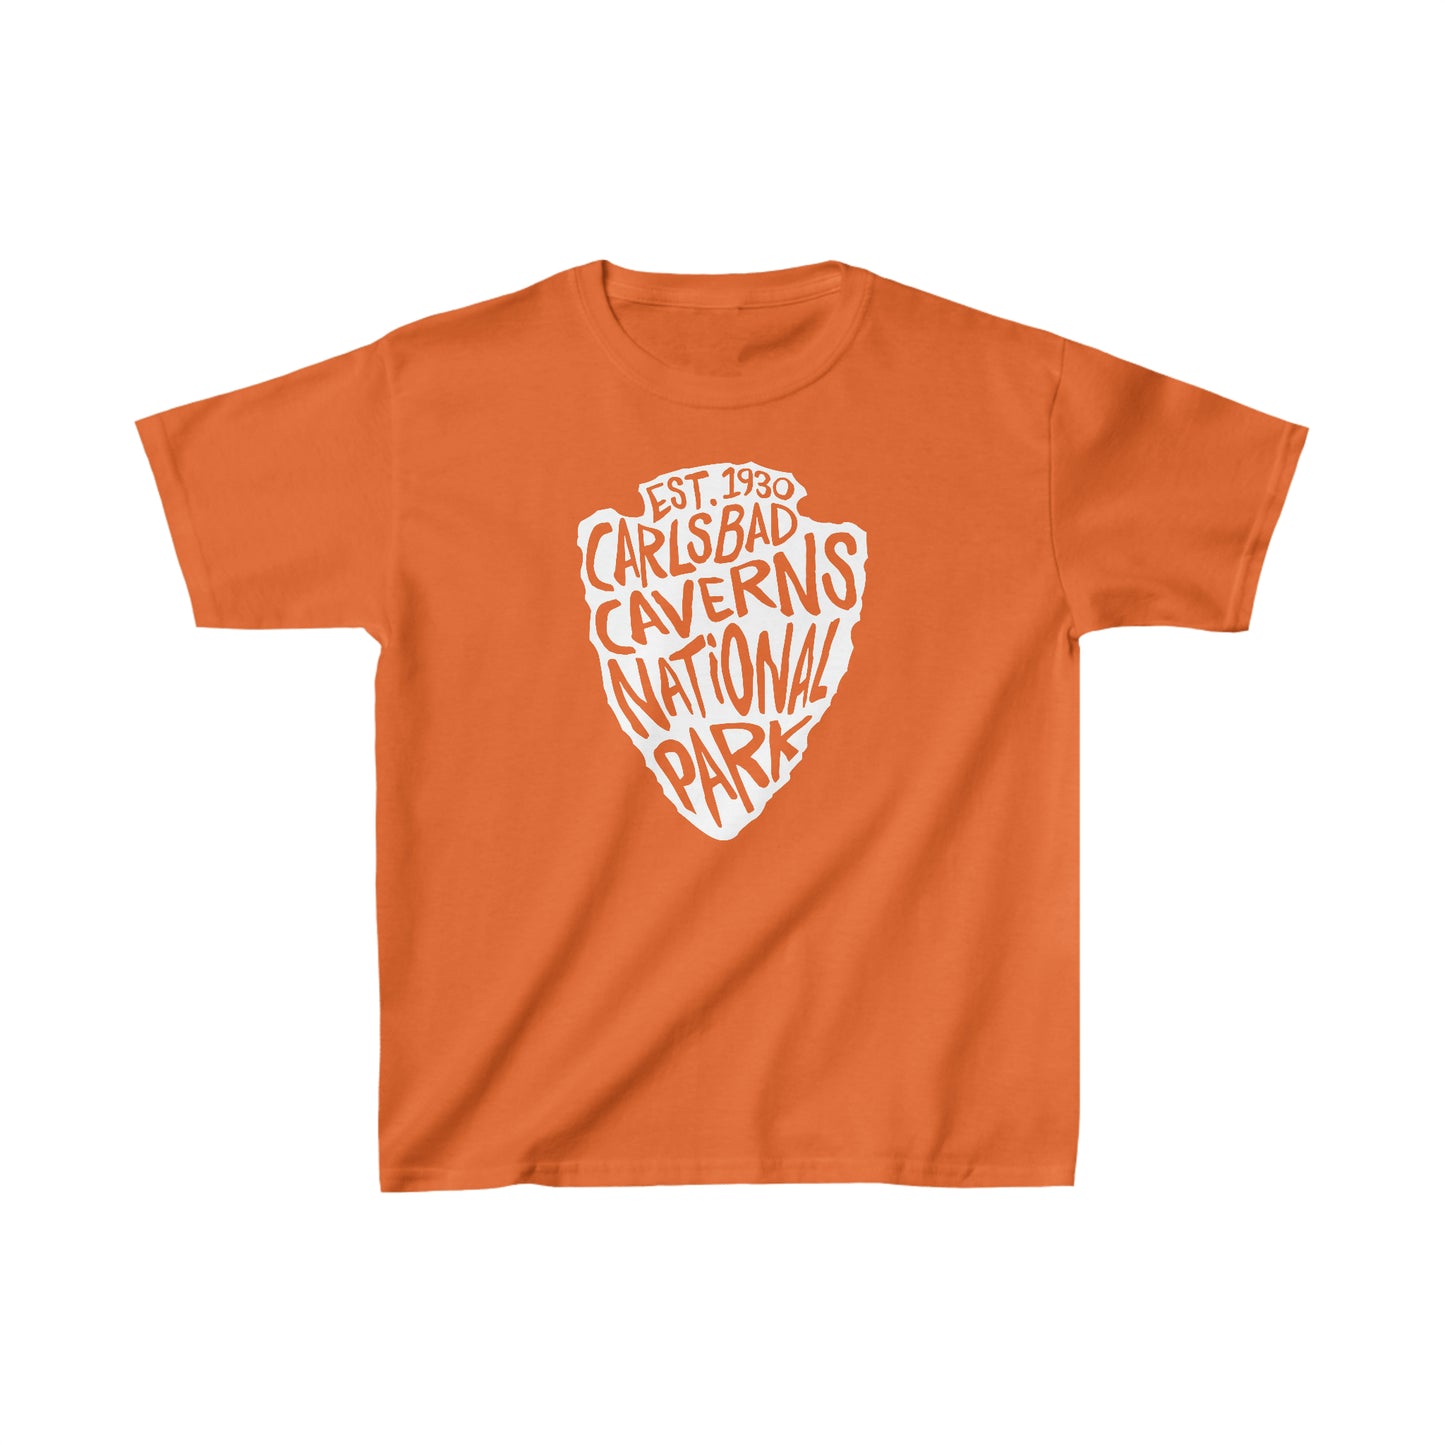 Carlsbad Caverns National Park Child T-Shirt - Arrowhead Design